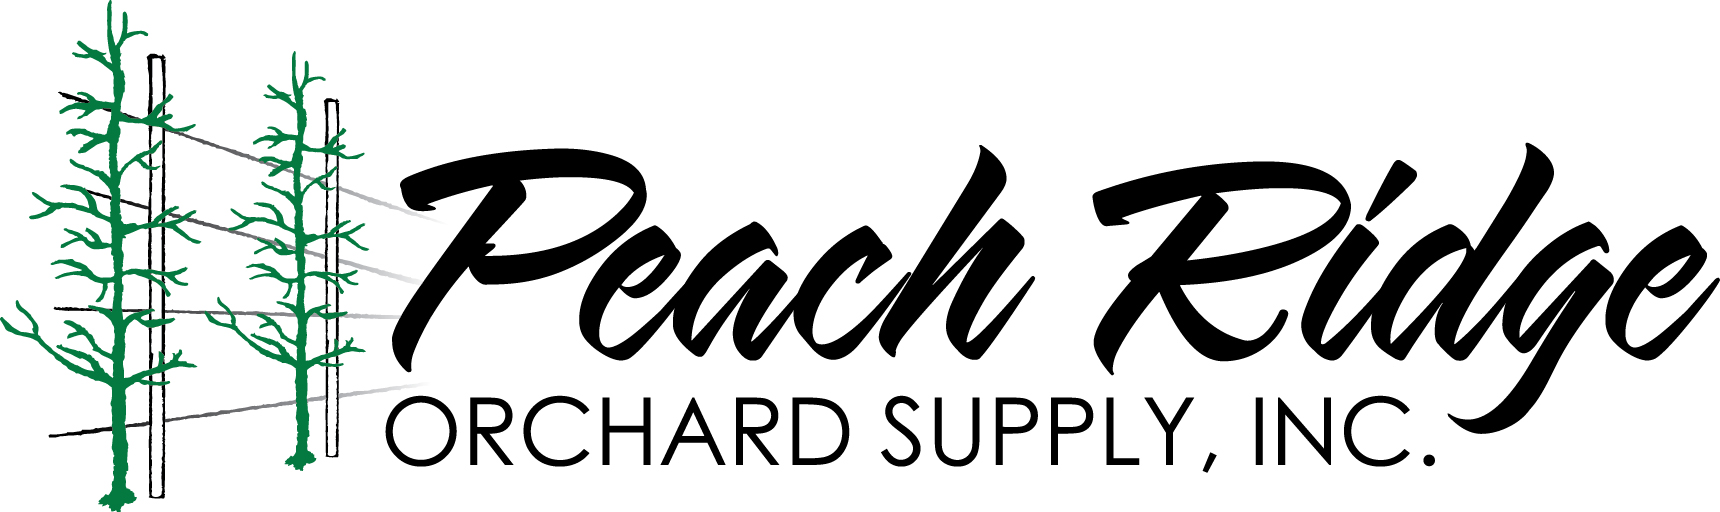 Peach Ridge Orchard Supply